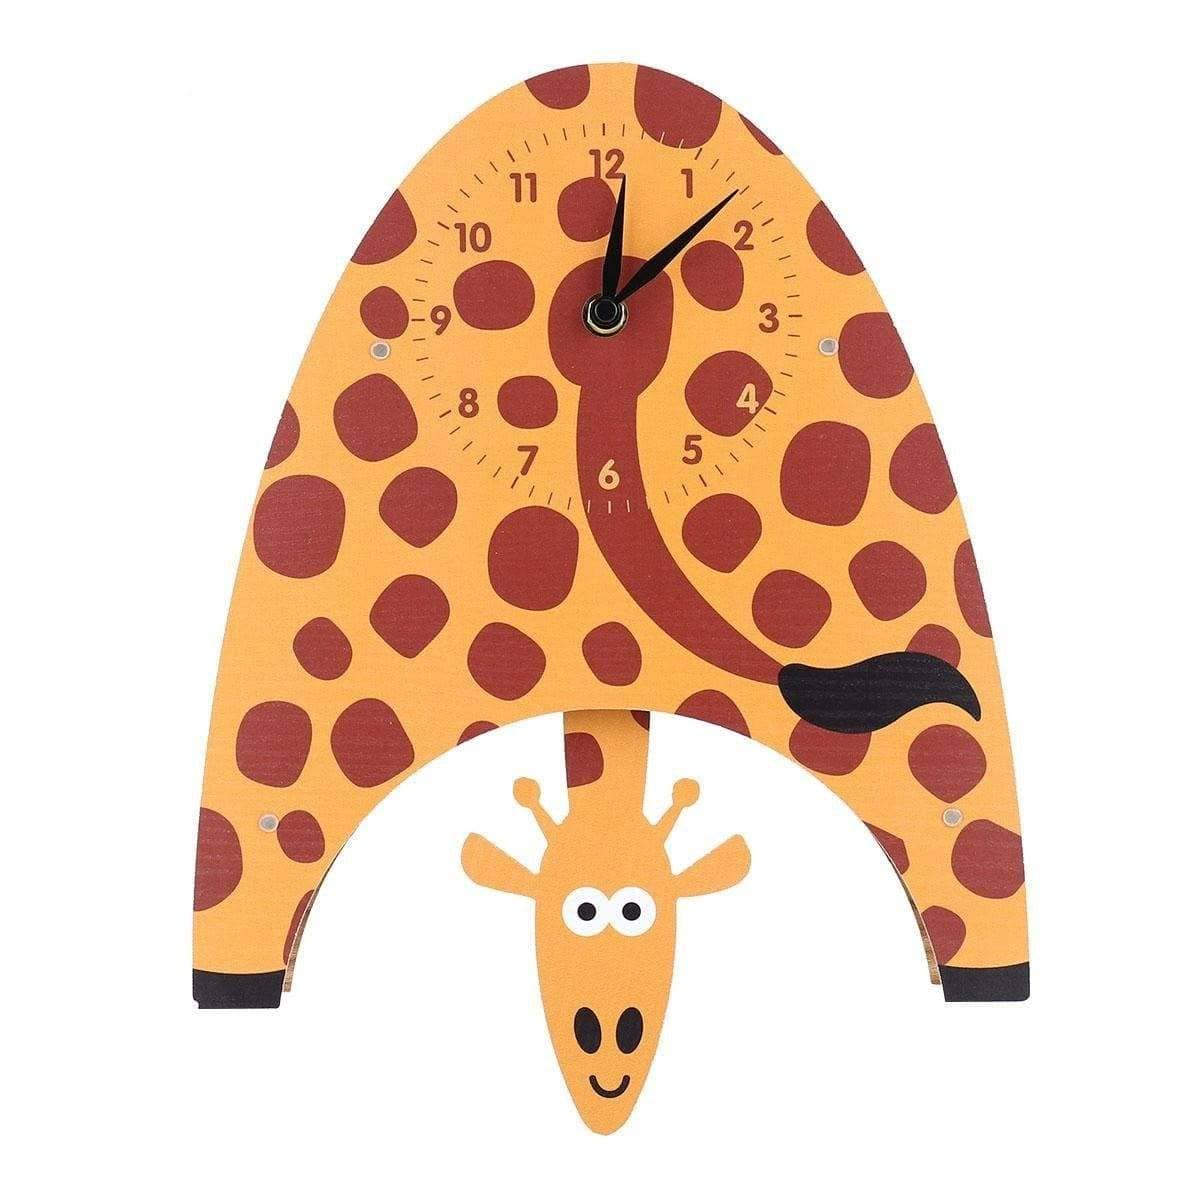 Swinging Giraffe Kids Bedroom Wall Clocks: Fun and Whimsical Decor